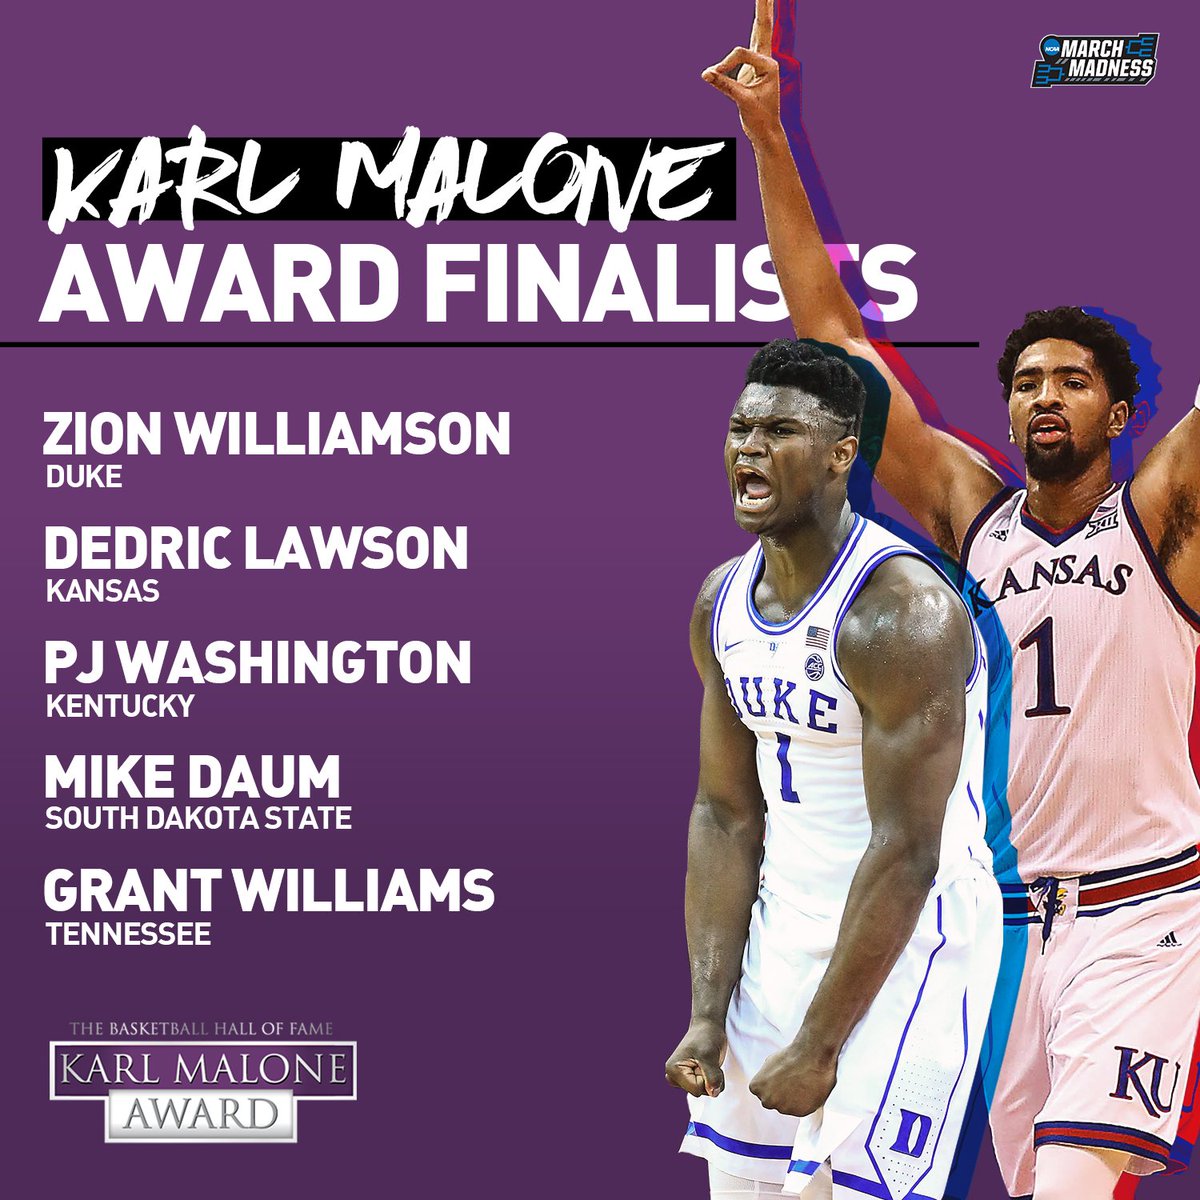 #MaloneAward Finalists:

Zion Williamson
Dedric Lawson
PJ Washington
Mike Daum
Grant Williams

Who is the top PF in the nation?